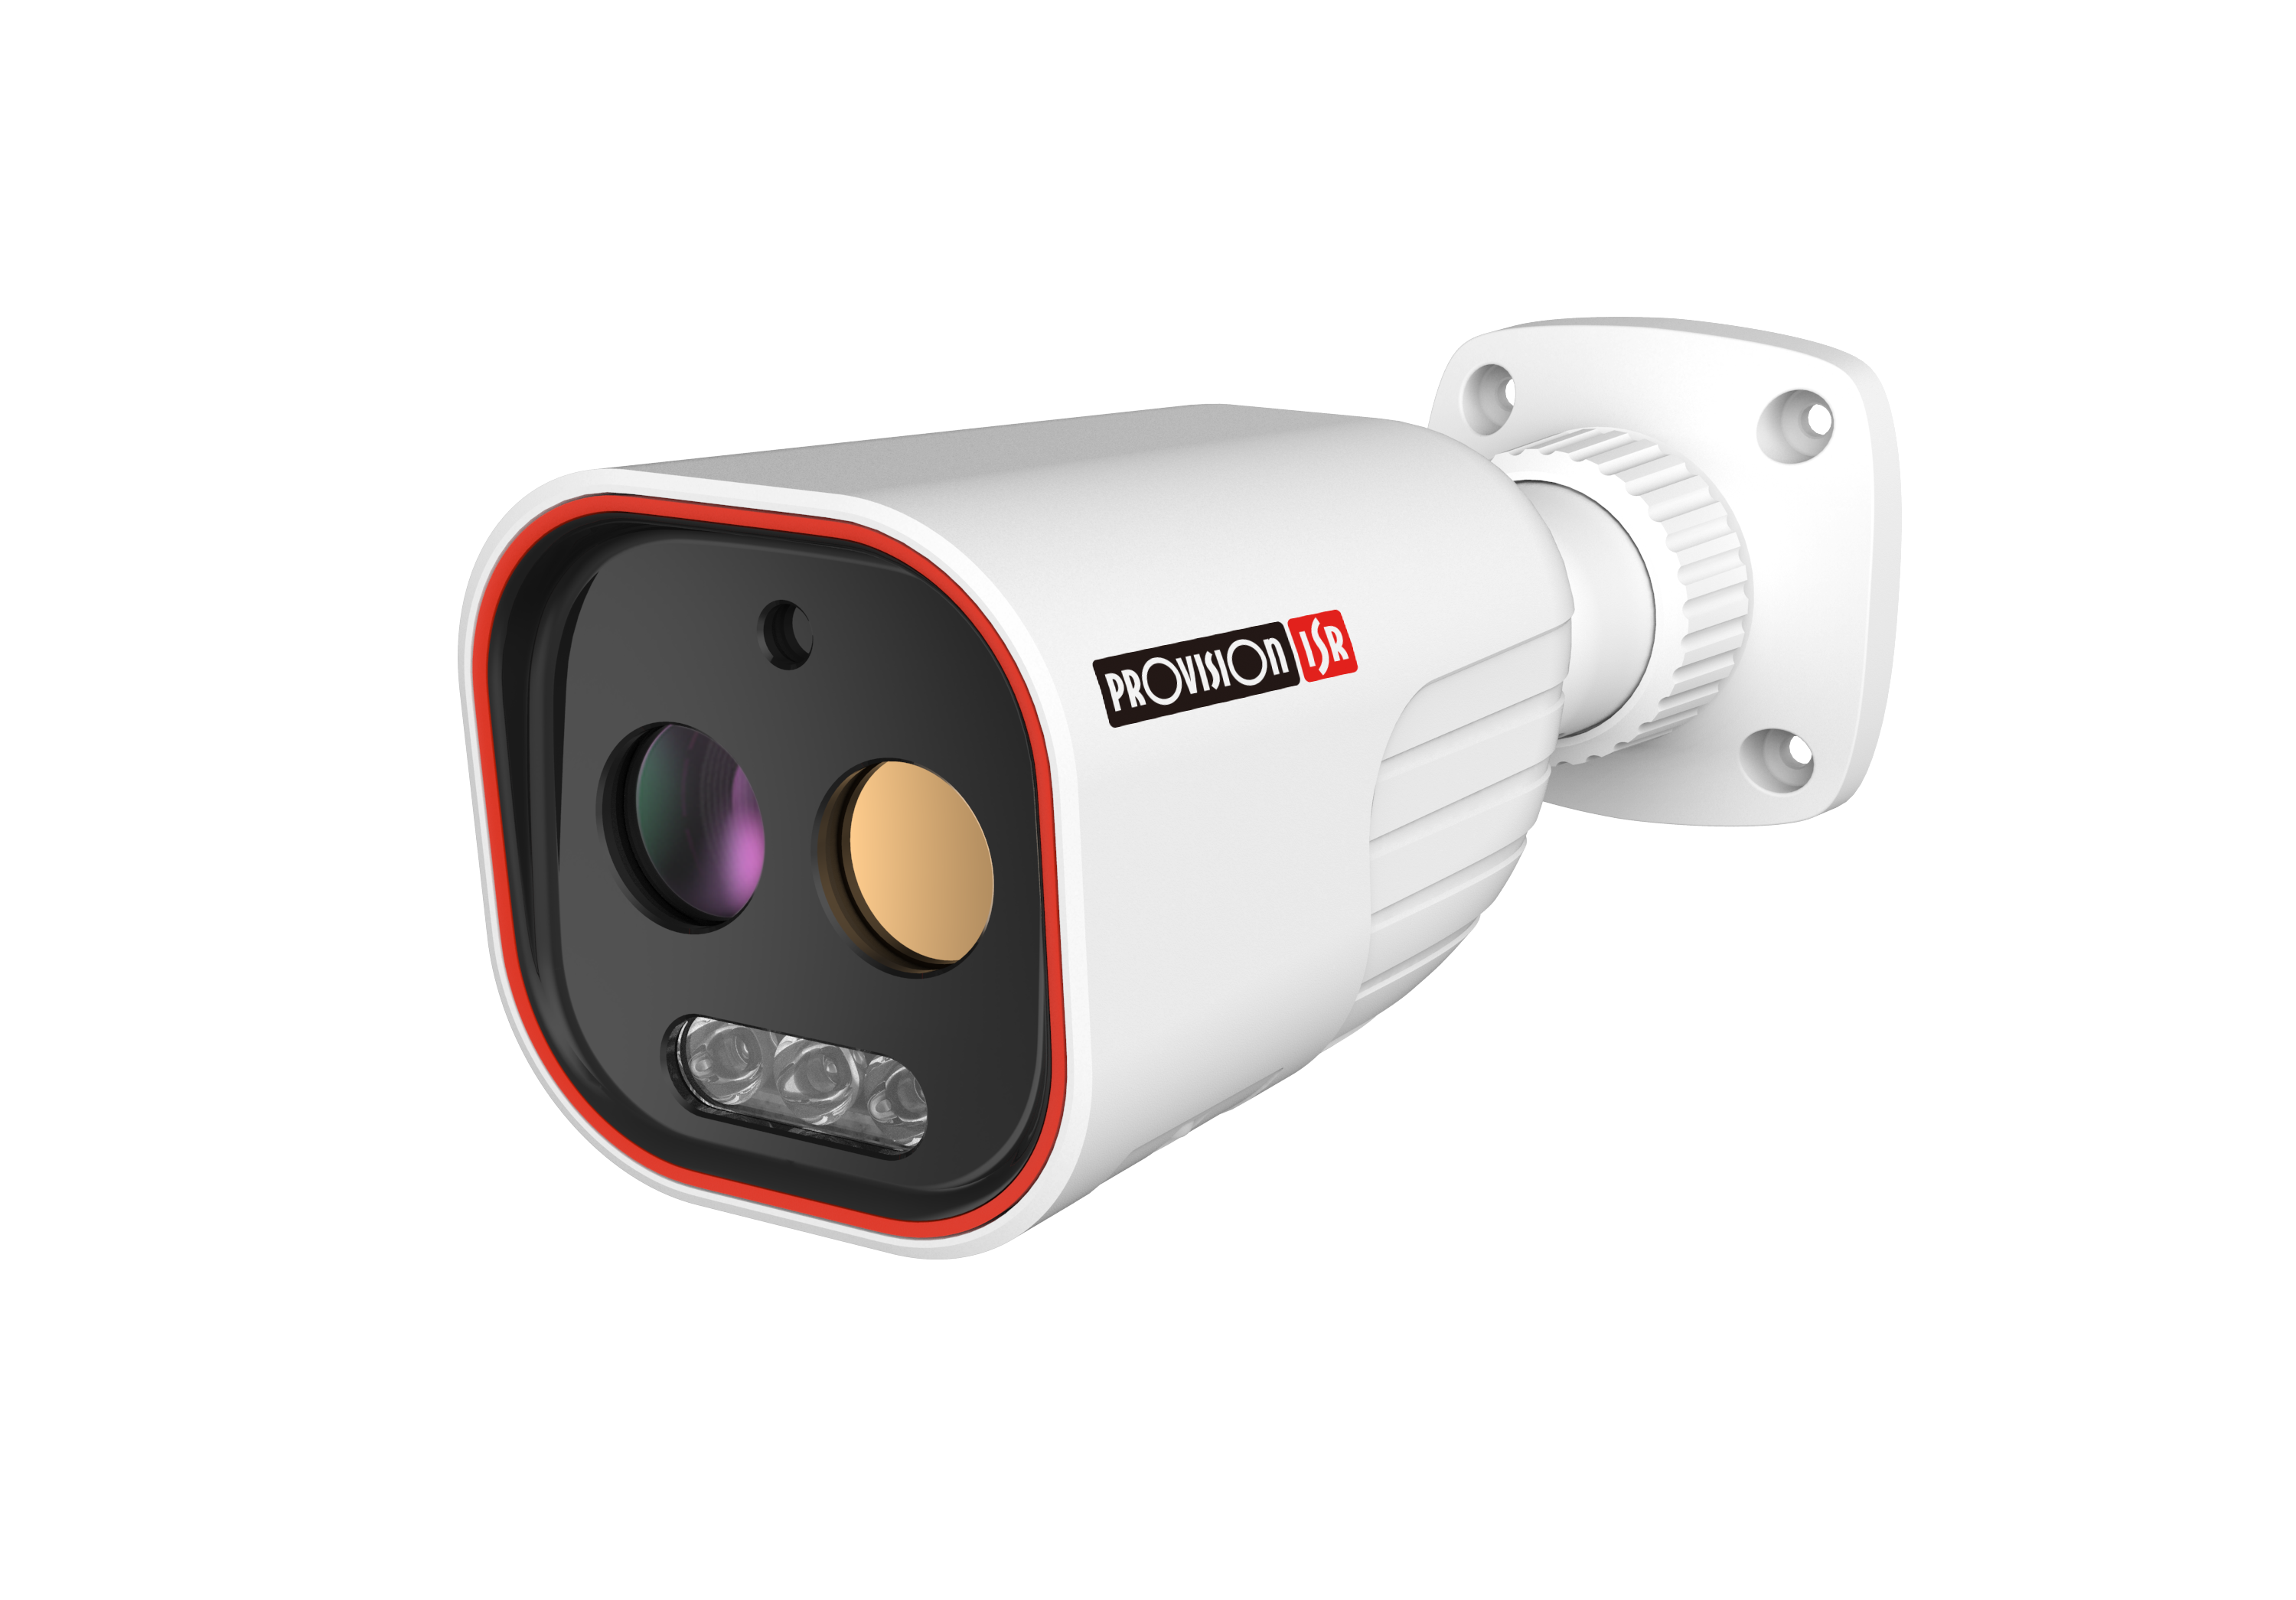 Thermal Network Bullet Camera, 5MP,7 mm thermal lens